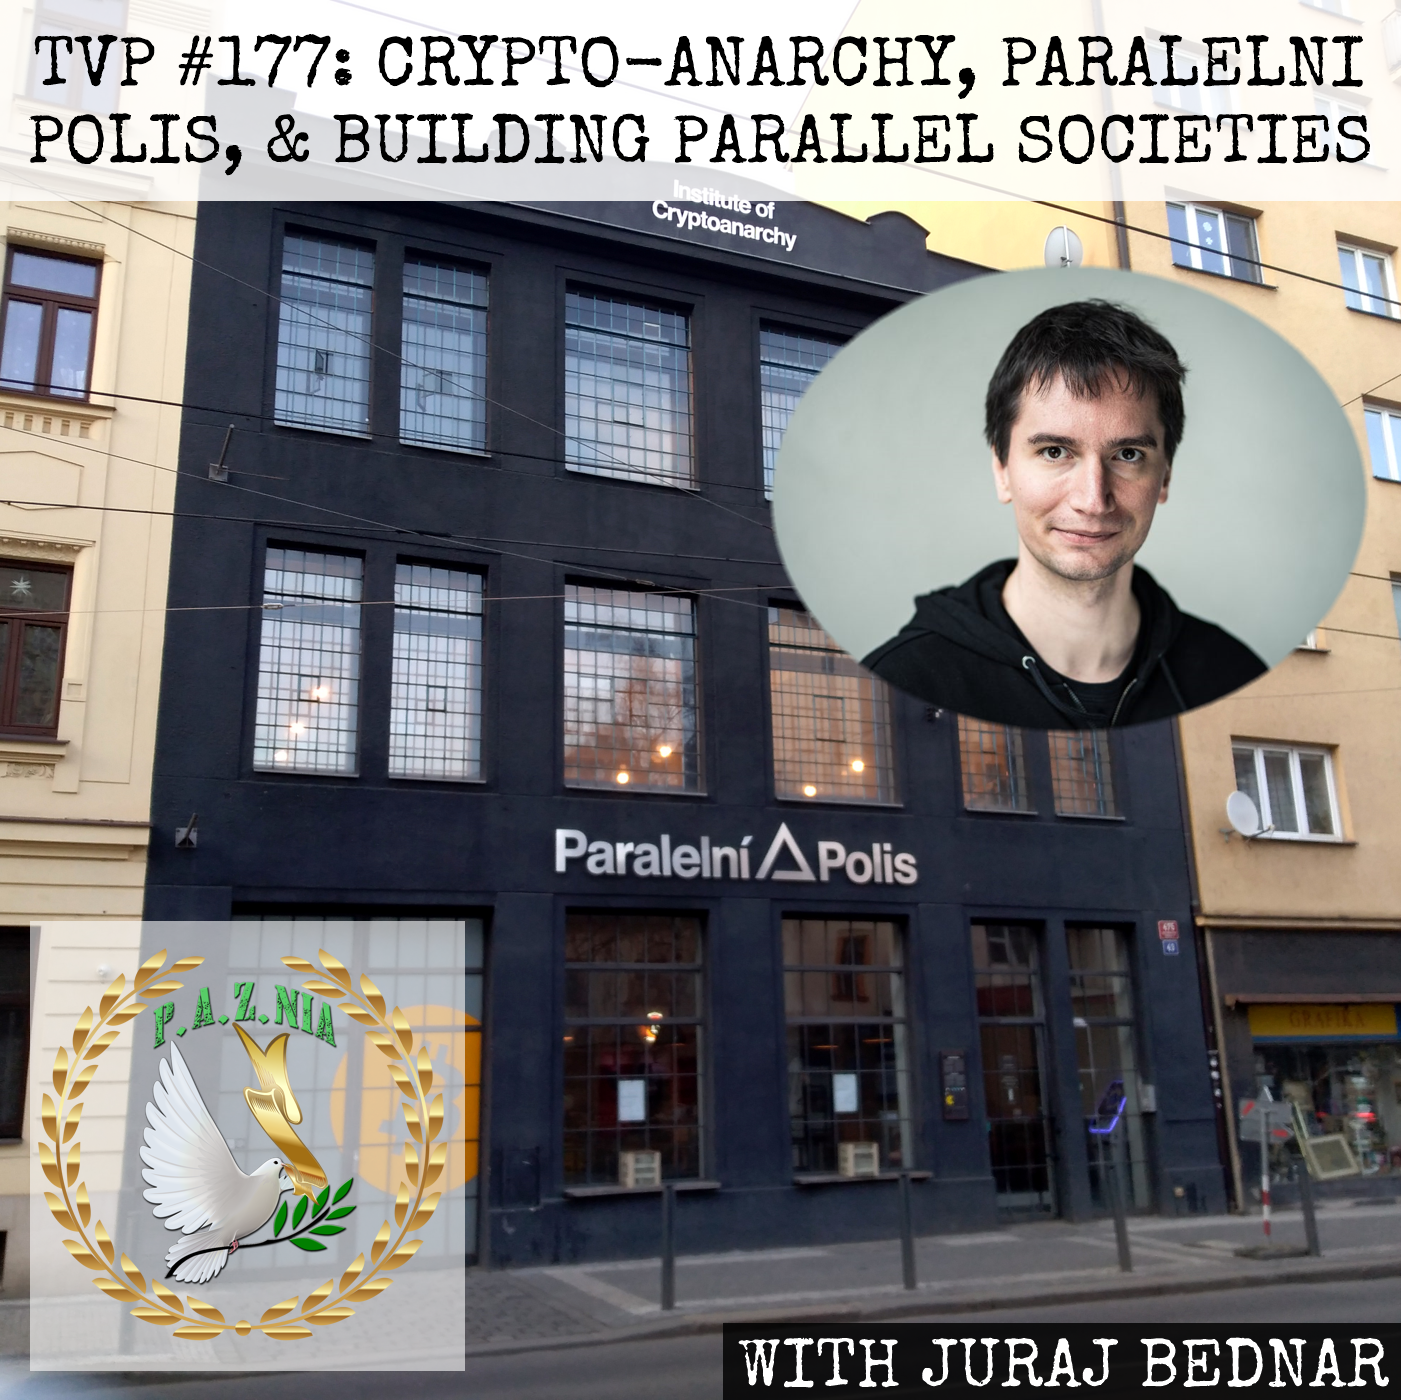 TVP #177: Crypto-Anarchy, Paralelni Polis, & Building Parallel Societies with Juraj Bednar